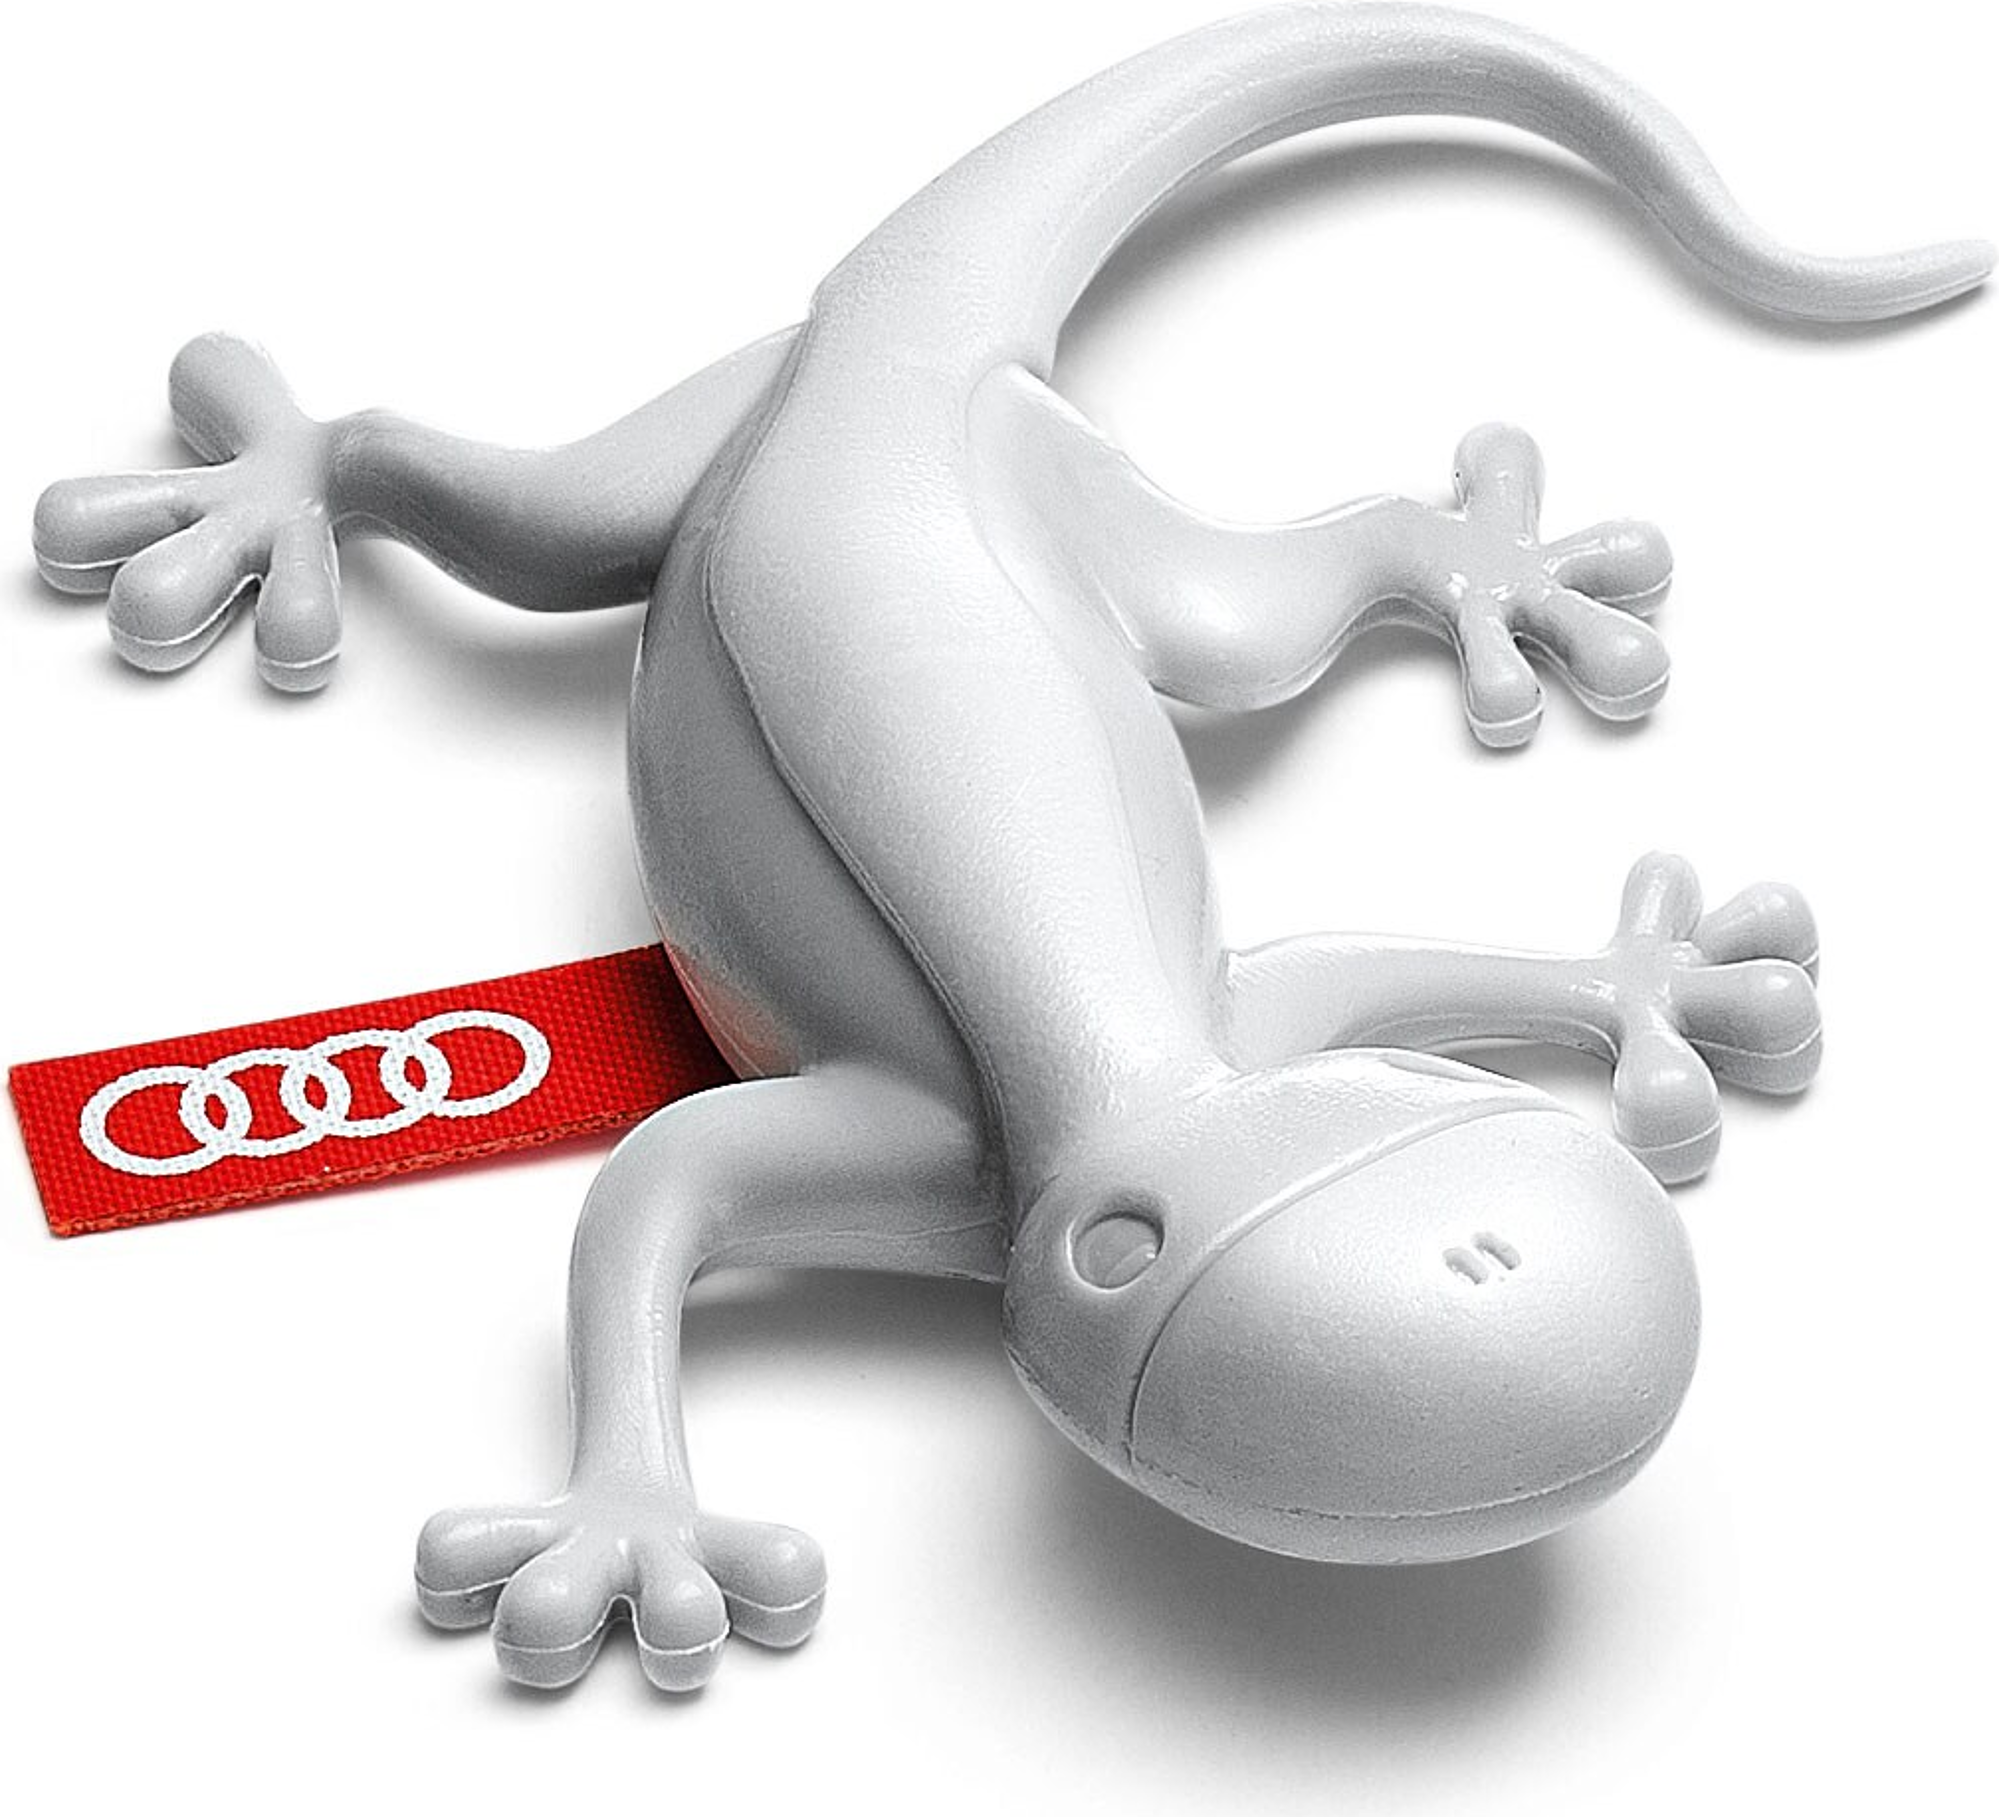 Audi - Gecko assainisseur d'air, gris clair, frais